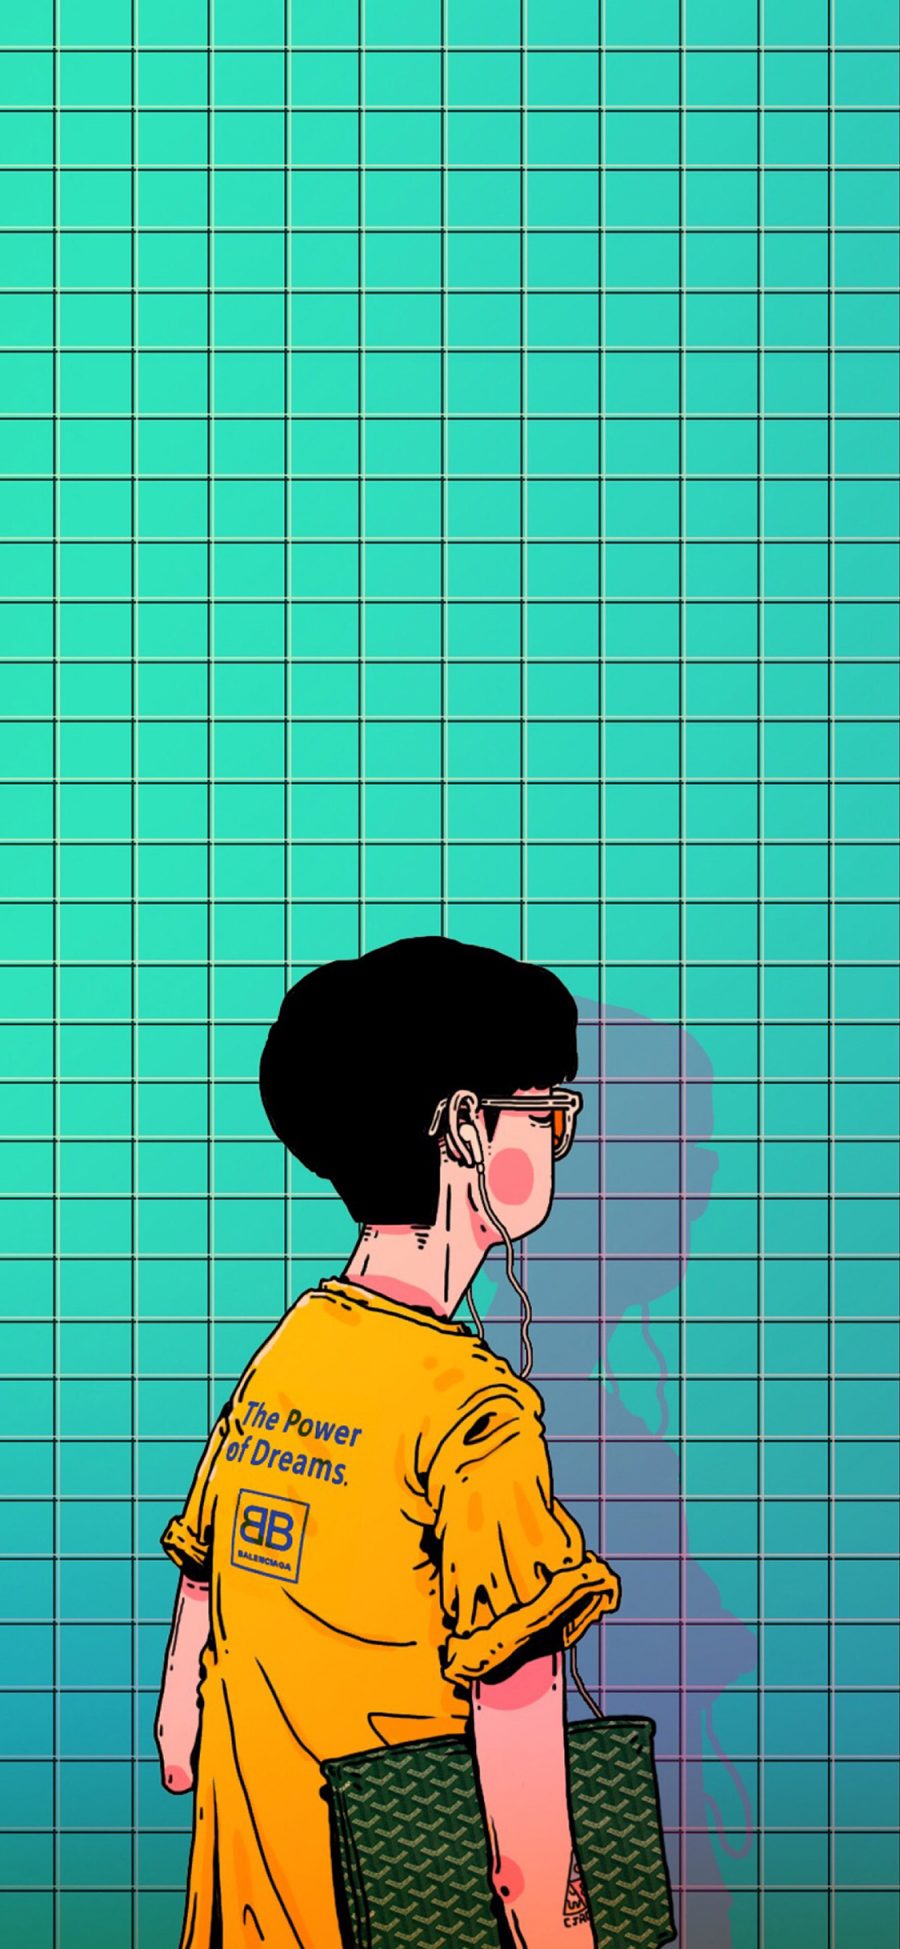 [2436×1125]CJroblue插图 男孩 背影 格子 苹果手机动漫壁纸图片